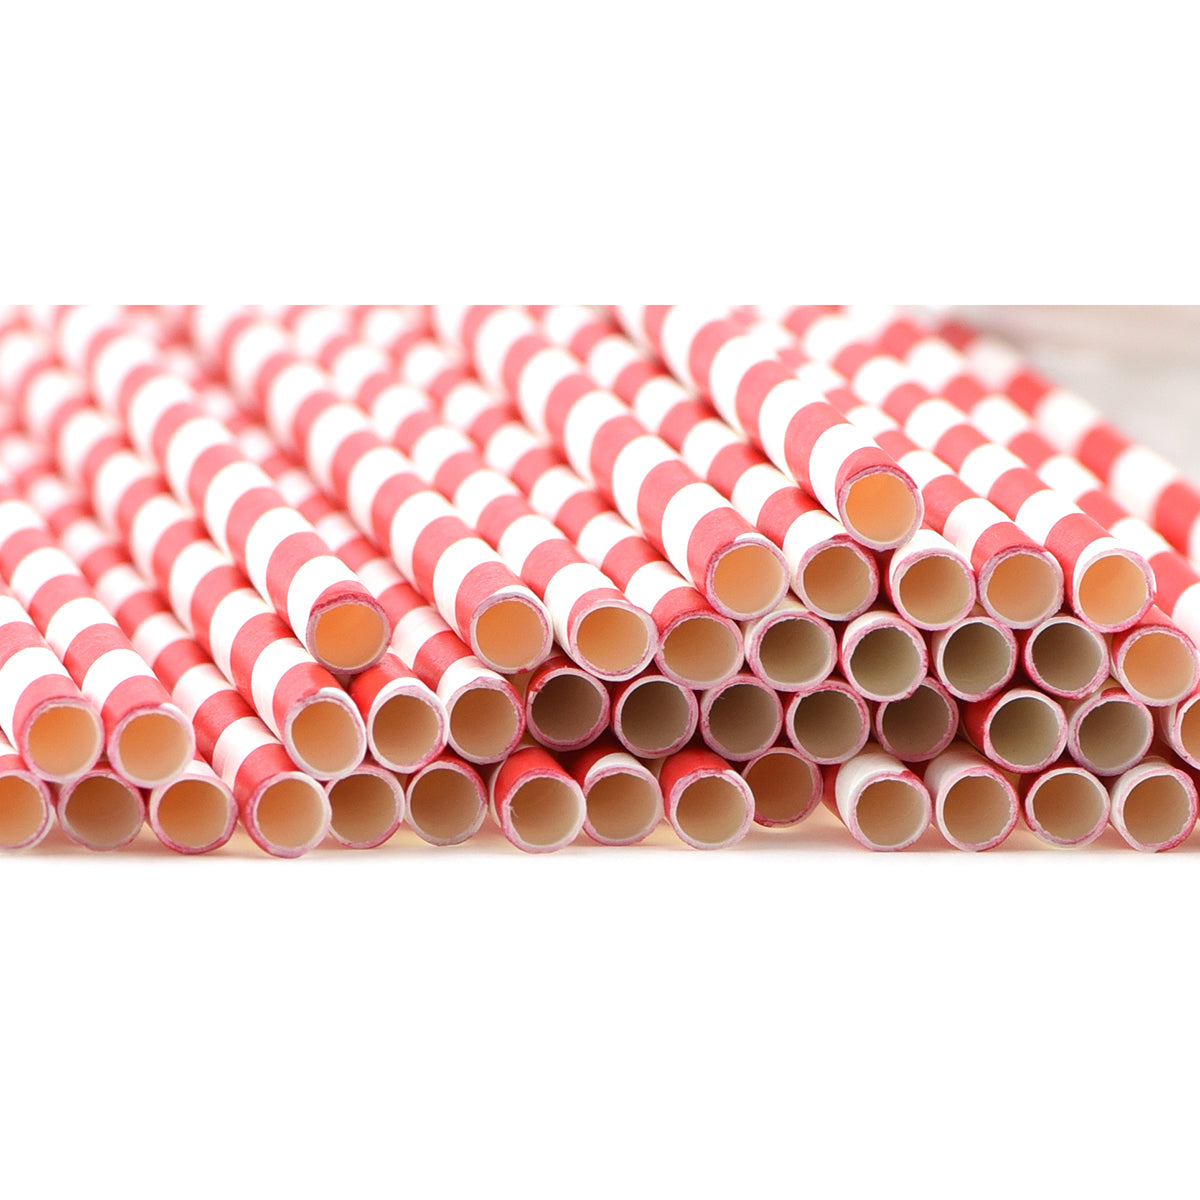 Red & White Striped Paper Straws